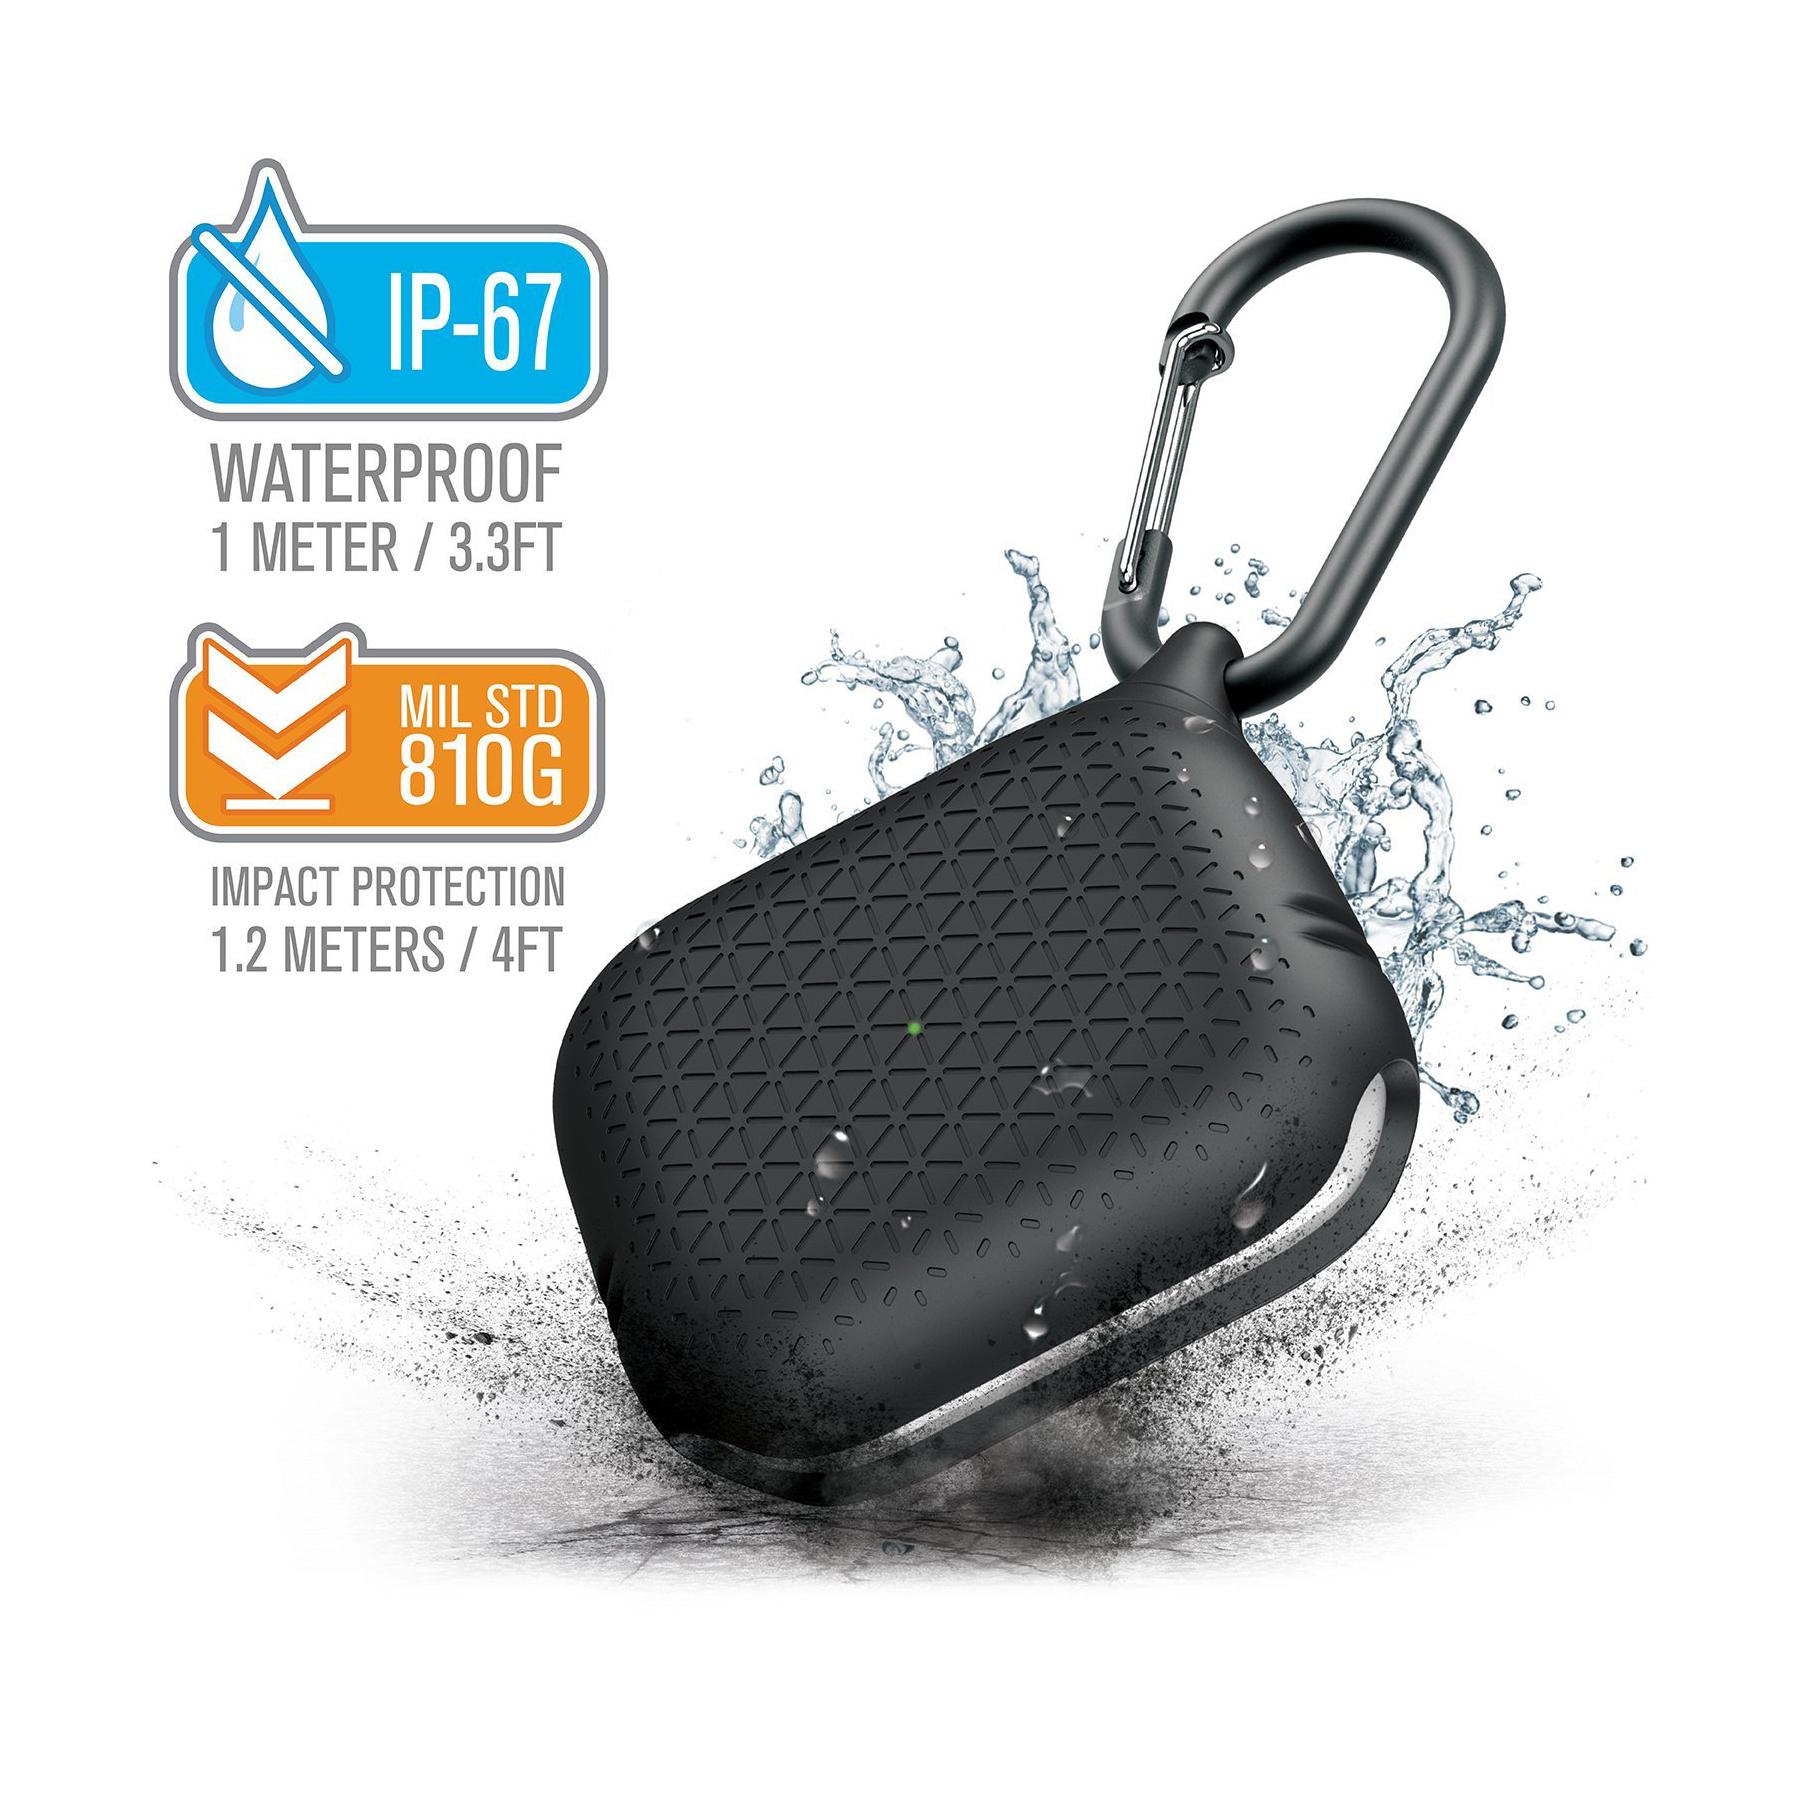 Catalyst Waterproof Premium Edition Apple AirPods Pro Case - Stealth Black